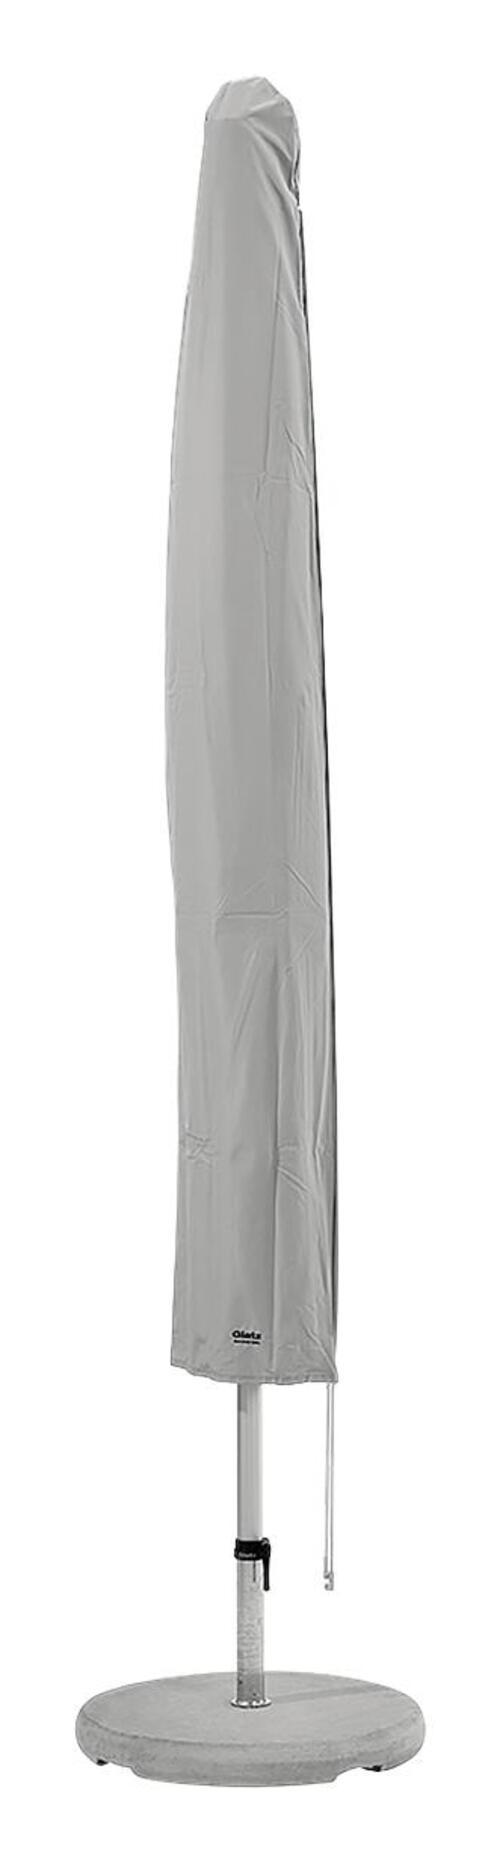 SCHIRMHÜLLE Grau   - Grau, Design, Textil (280/69cm) - Glatz